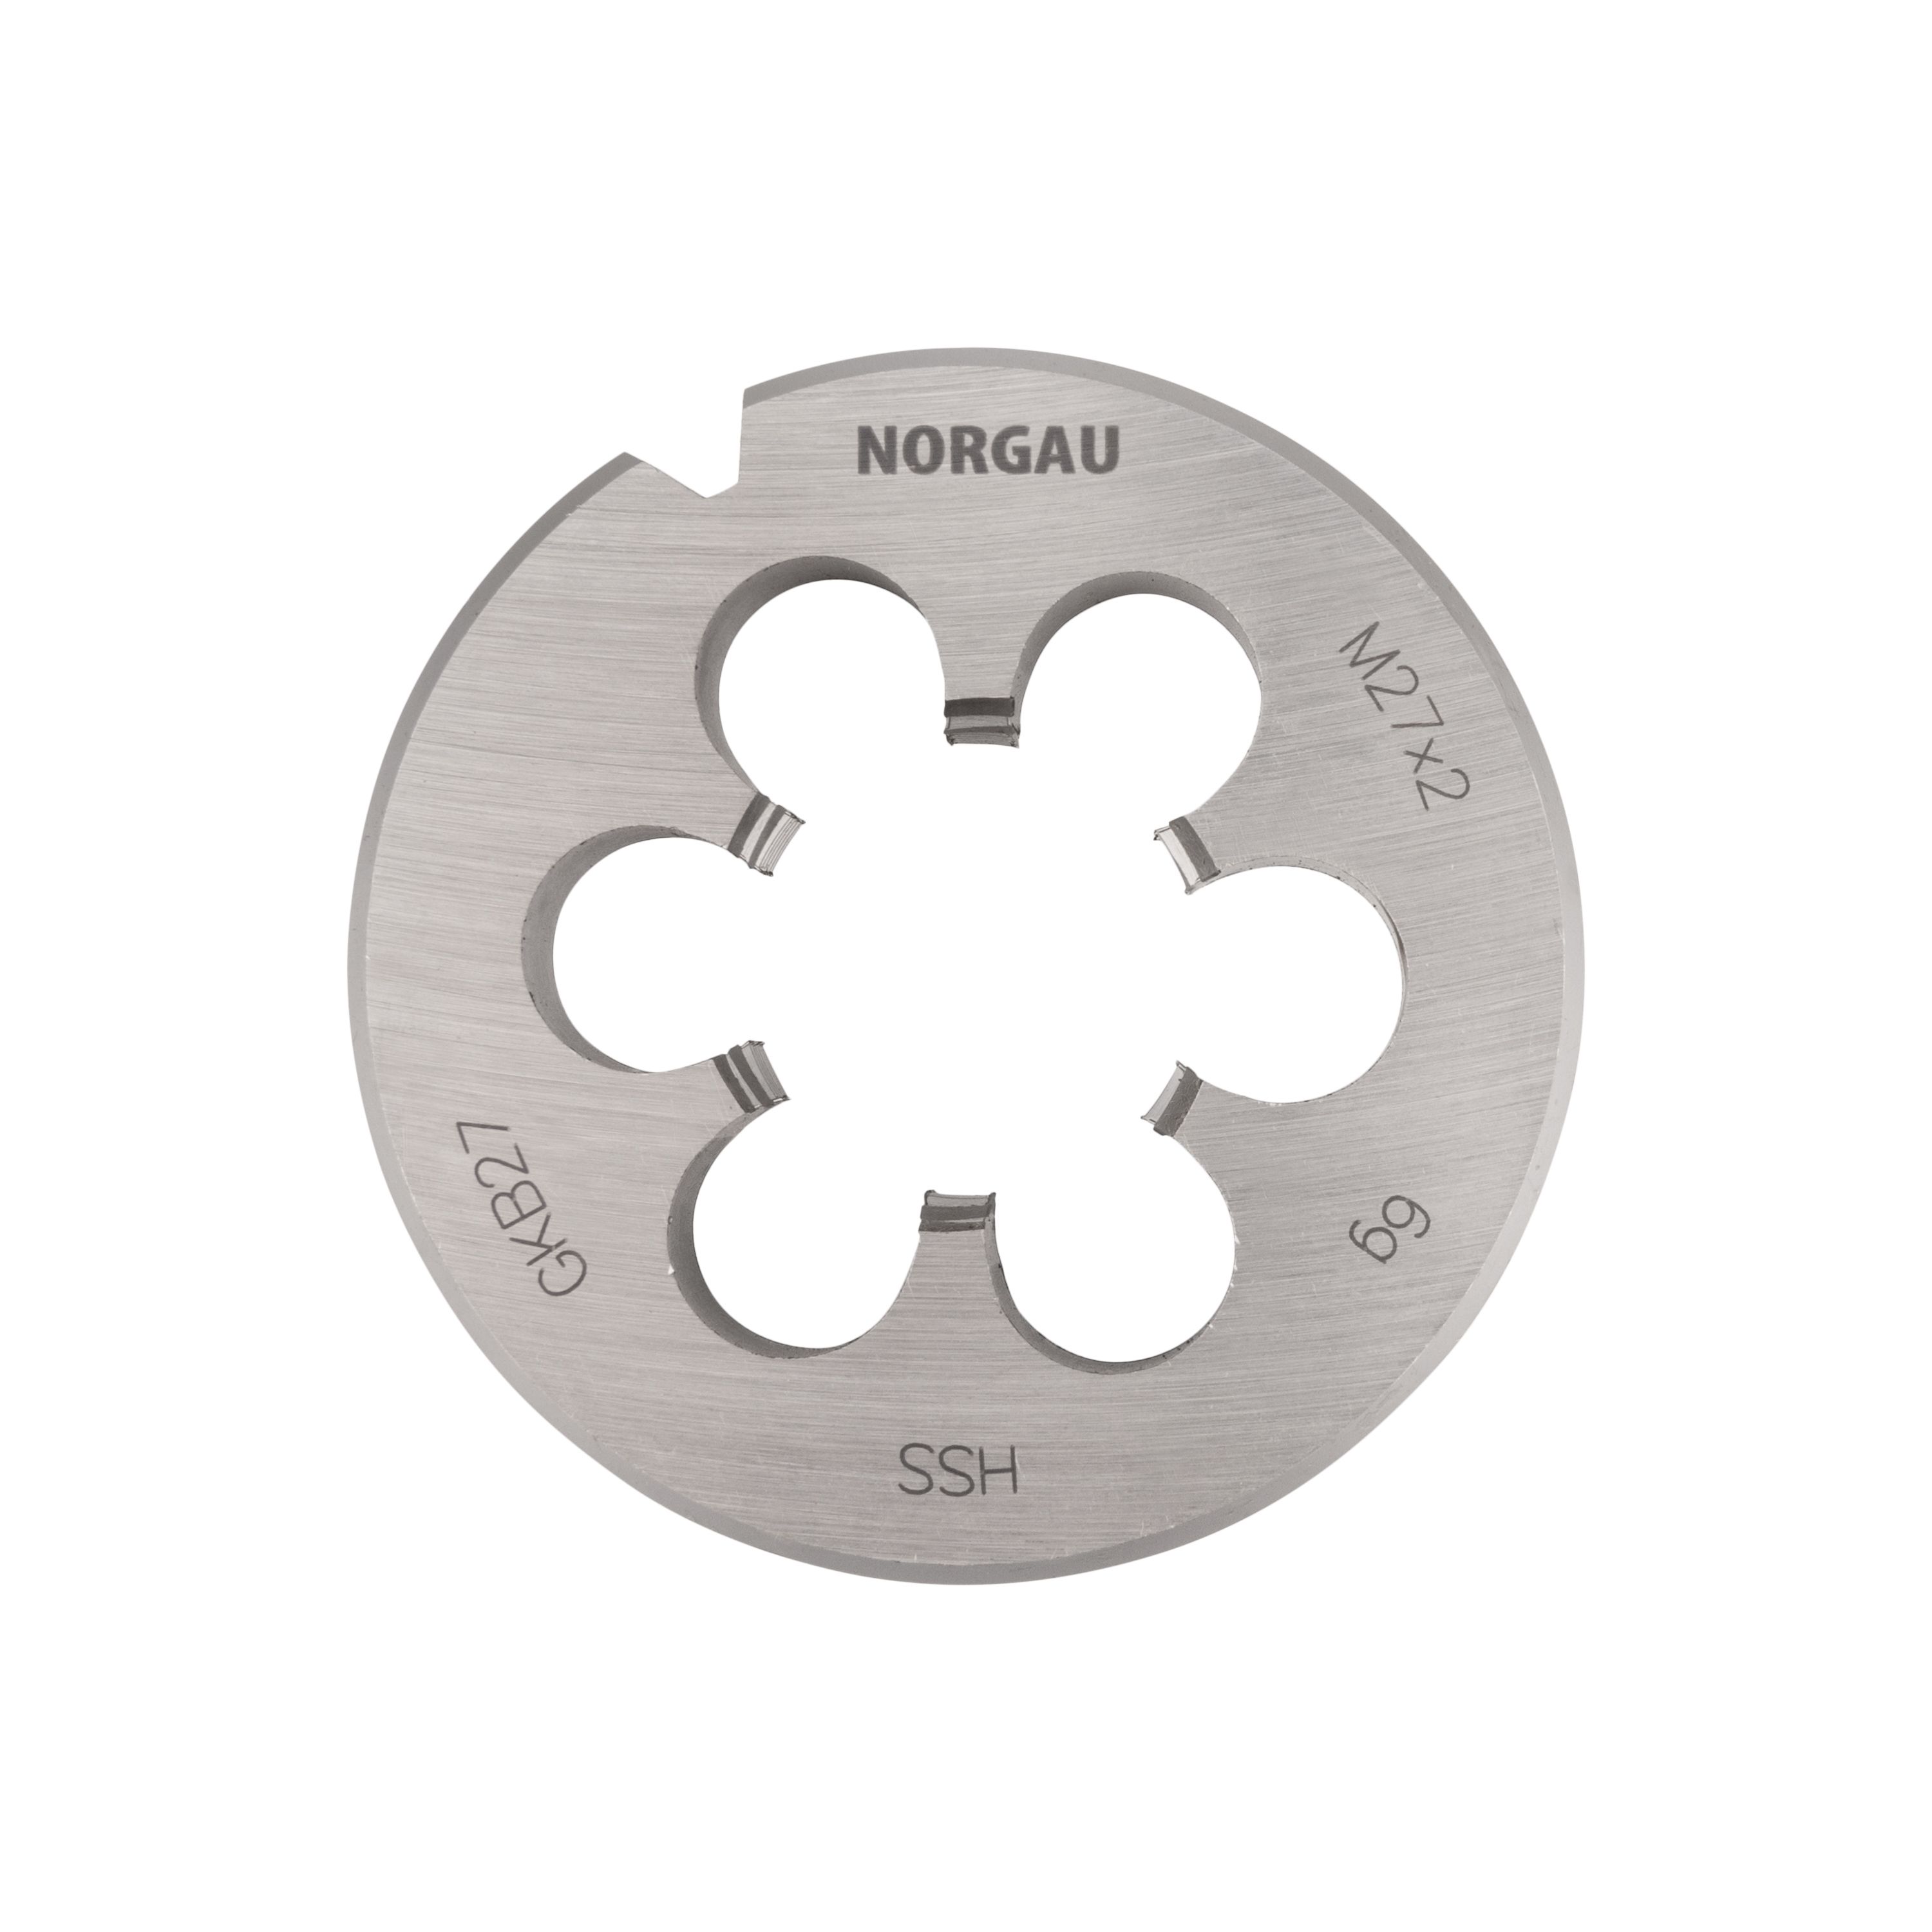 Плашка NORGAU Industrial MF27x2х65 мм. метрическая, угол 60, по DIN223, HSS плашка norgau industrial mf16x1 25х45 мм метрическая угол 60° по din223 hss